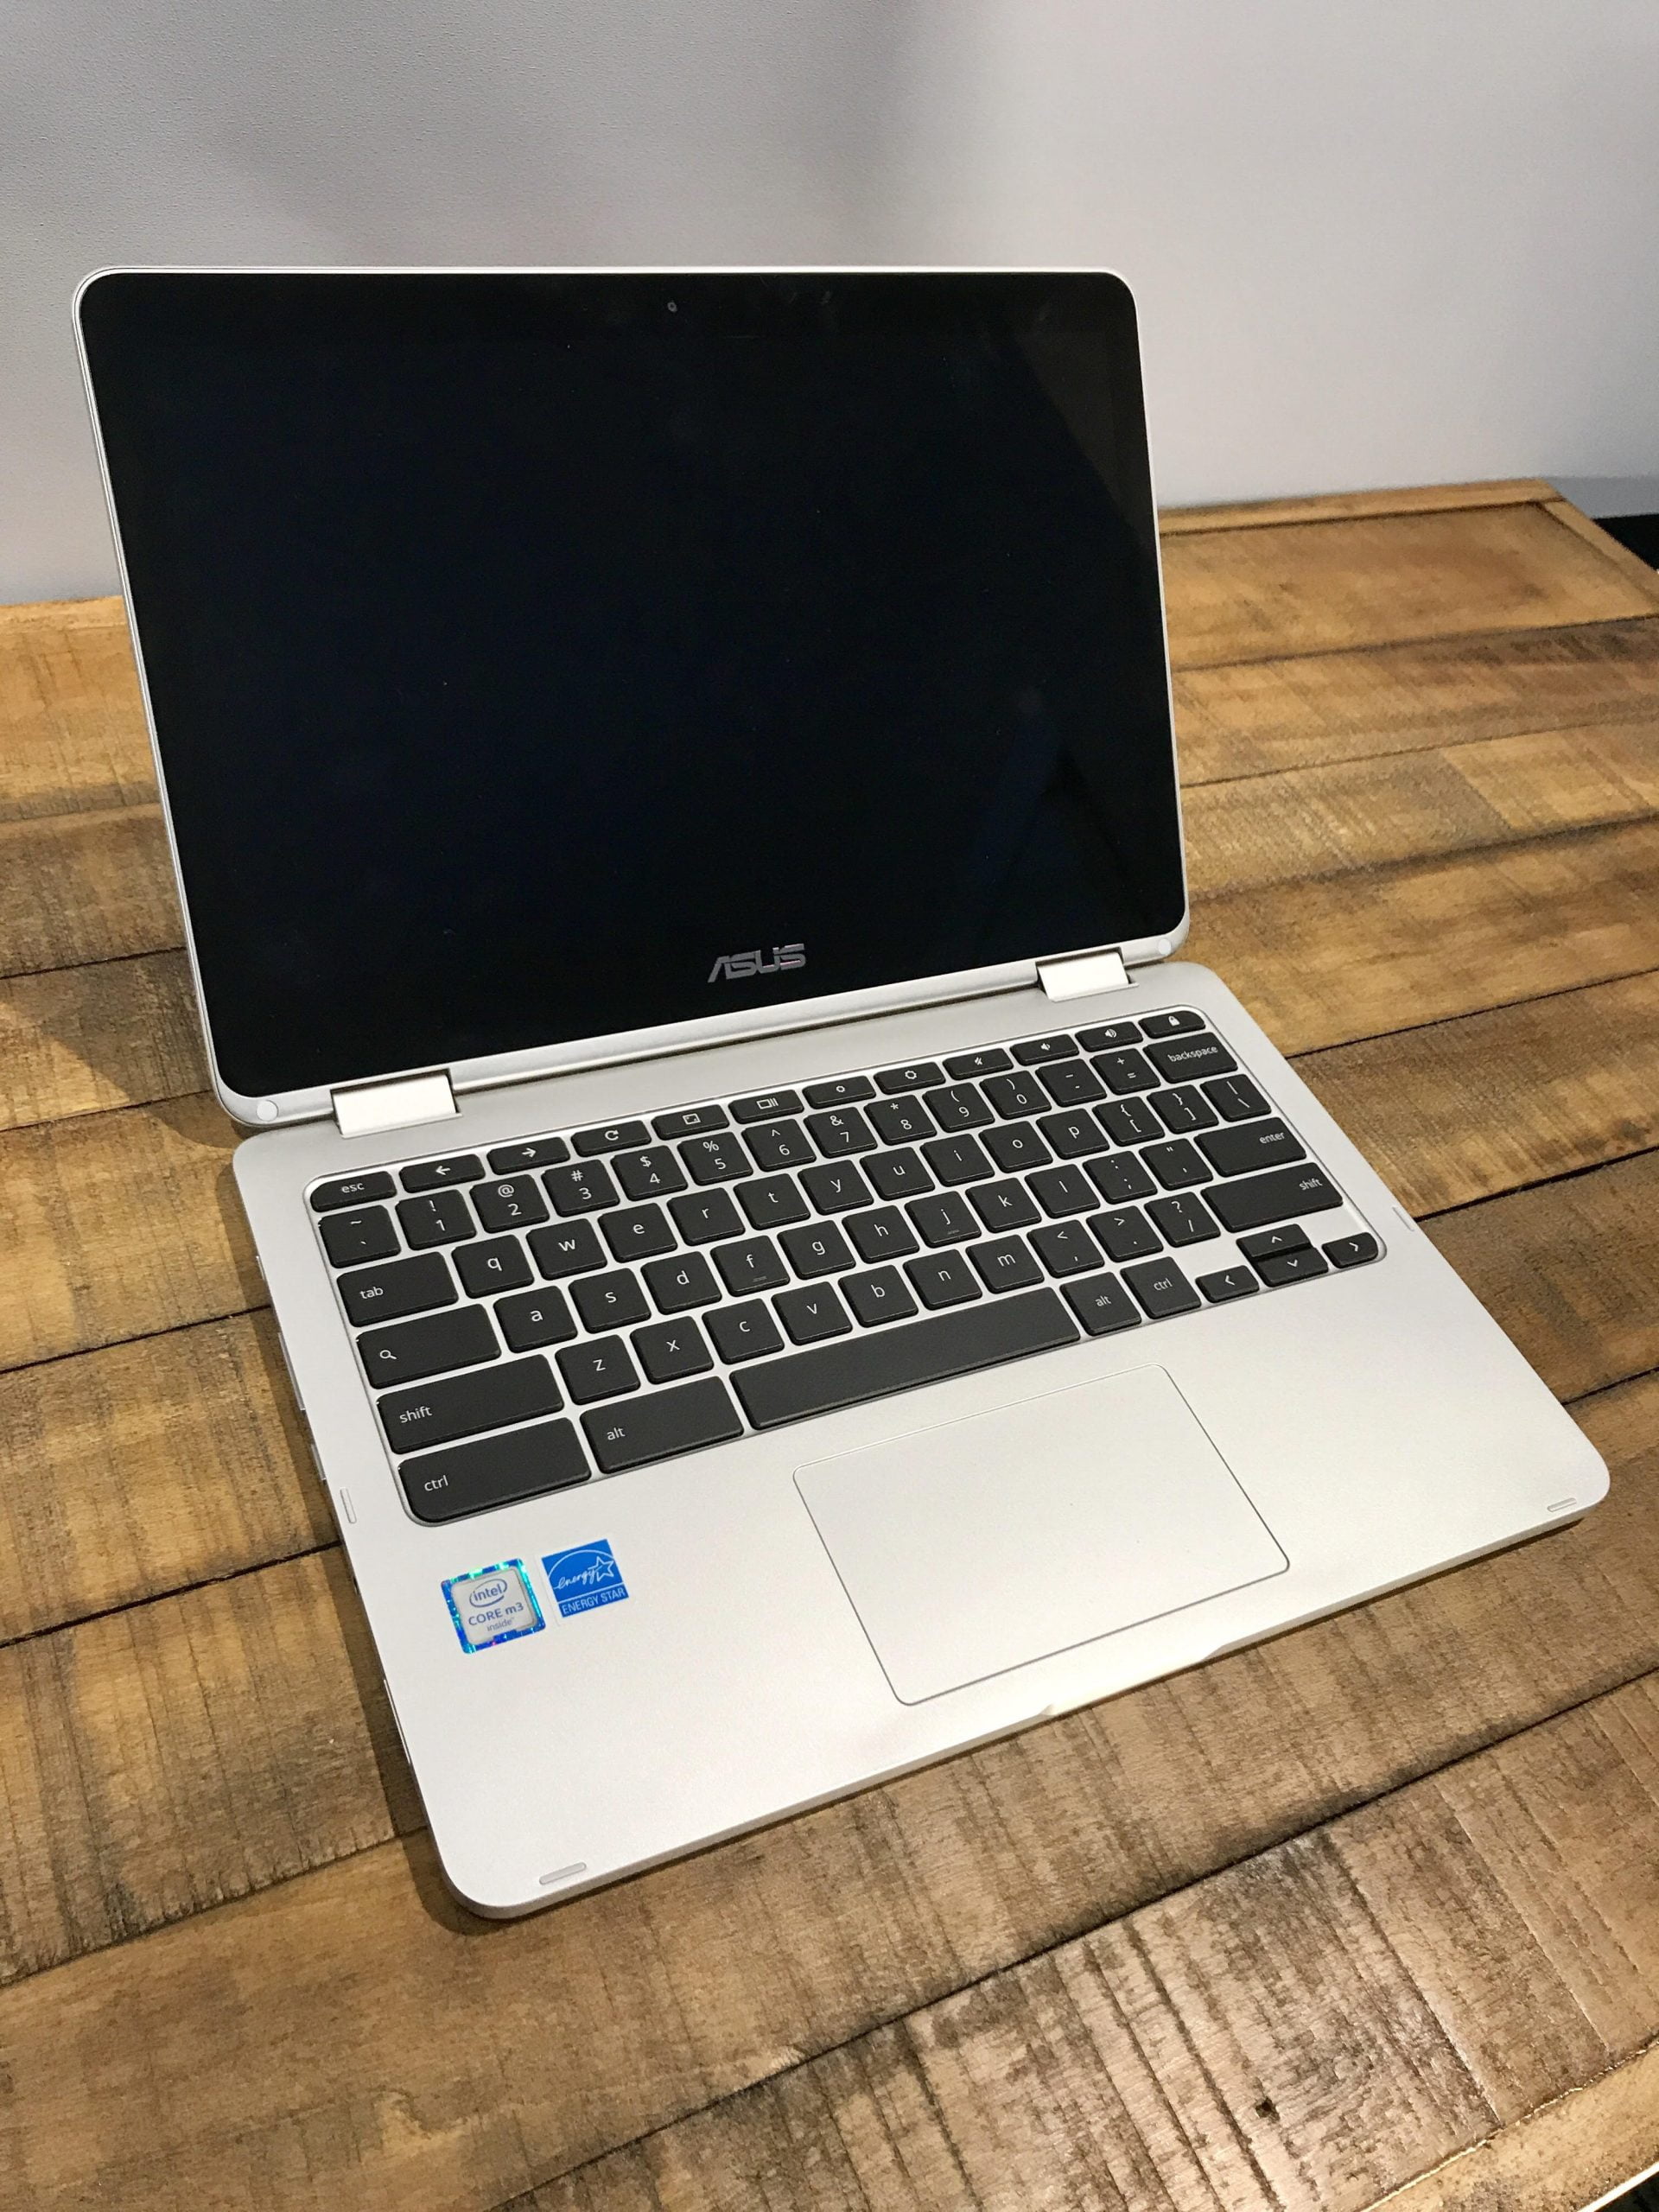 Best Chromebook - ASUS C302 Flip Review